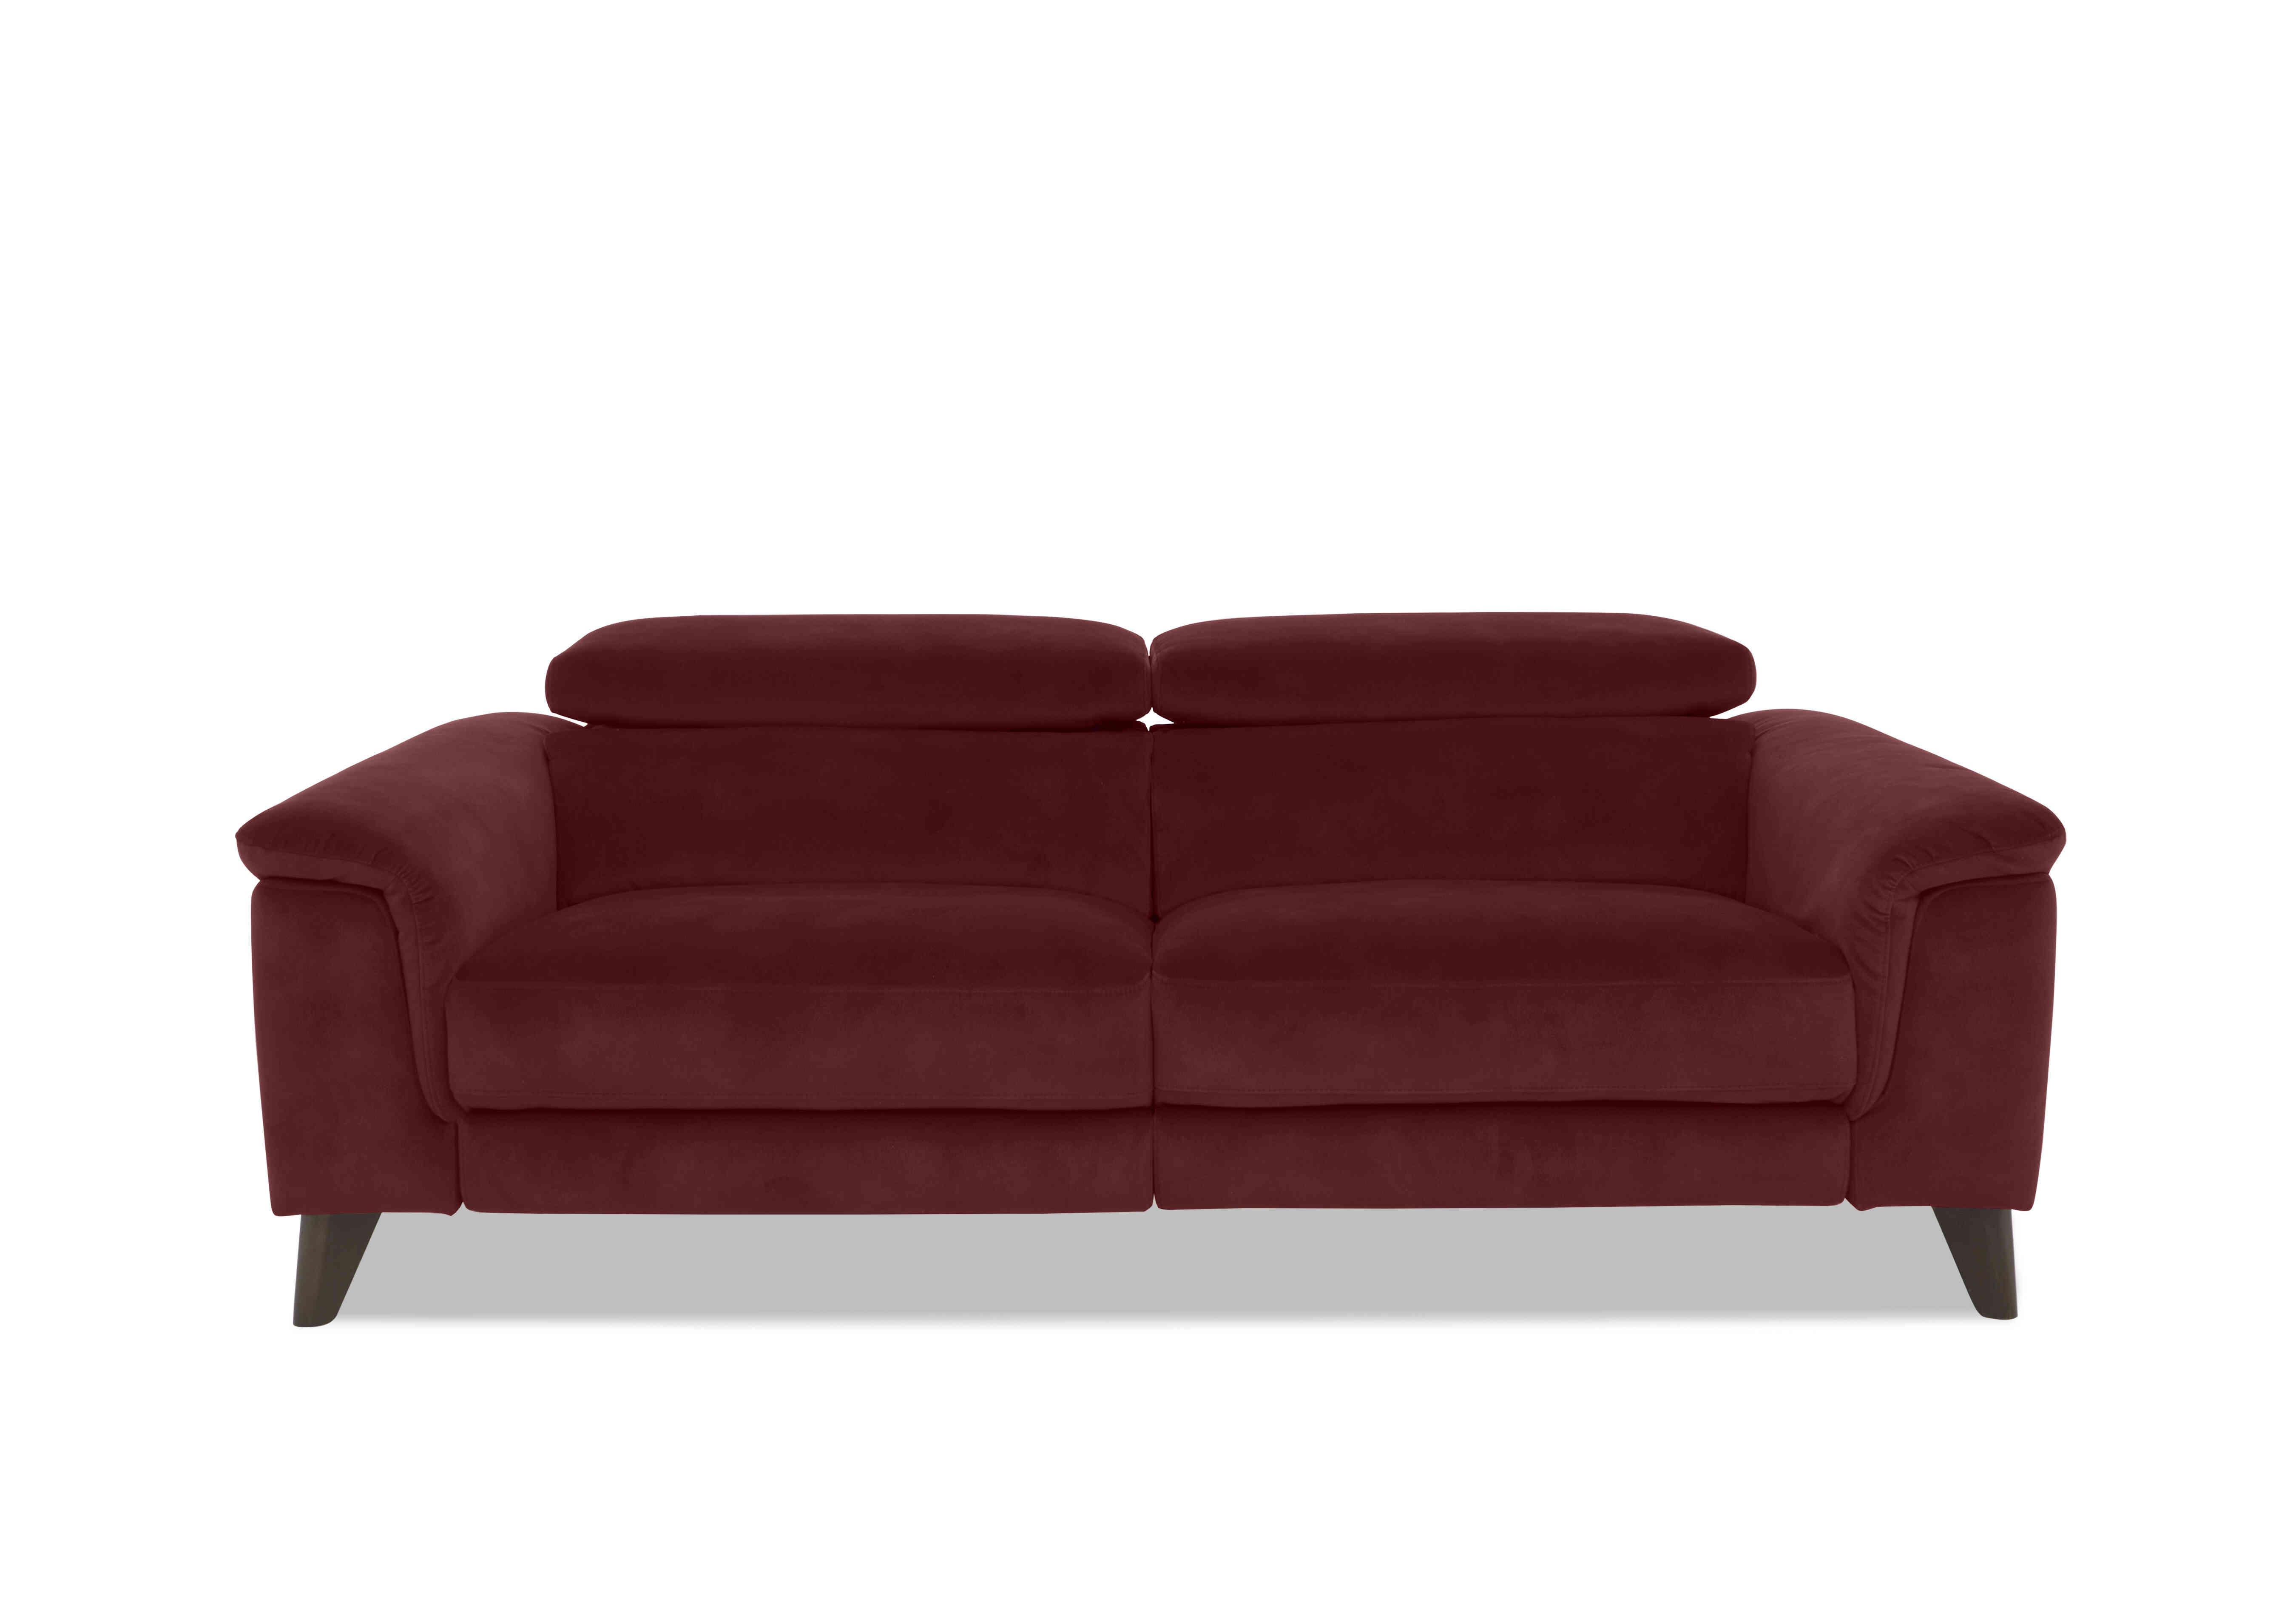 Wade 3 Seater Fabric Sofa in Fab-Meg-R65 Burgundy on Furniture Village